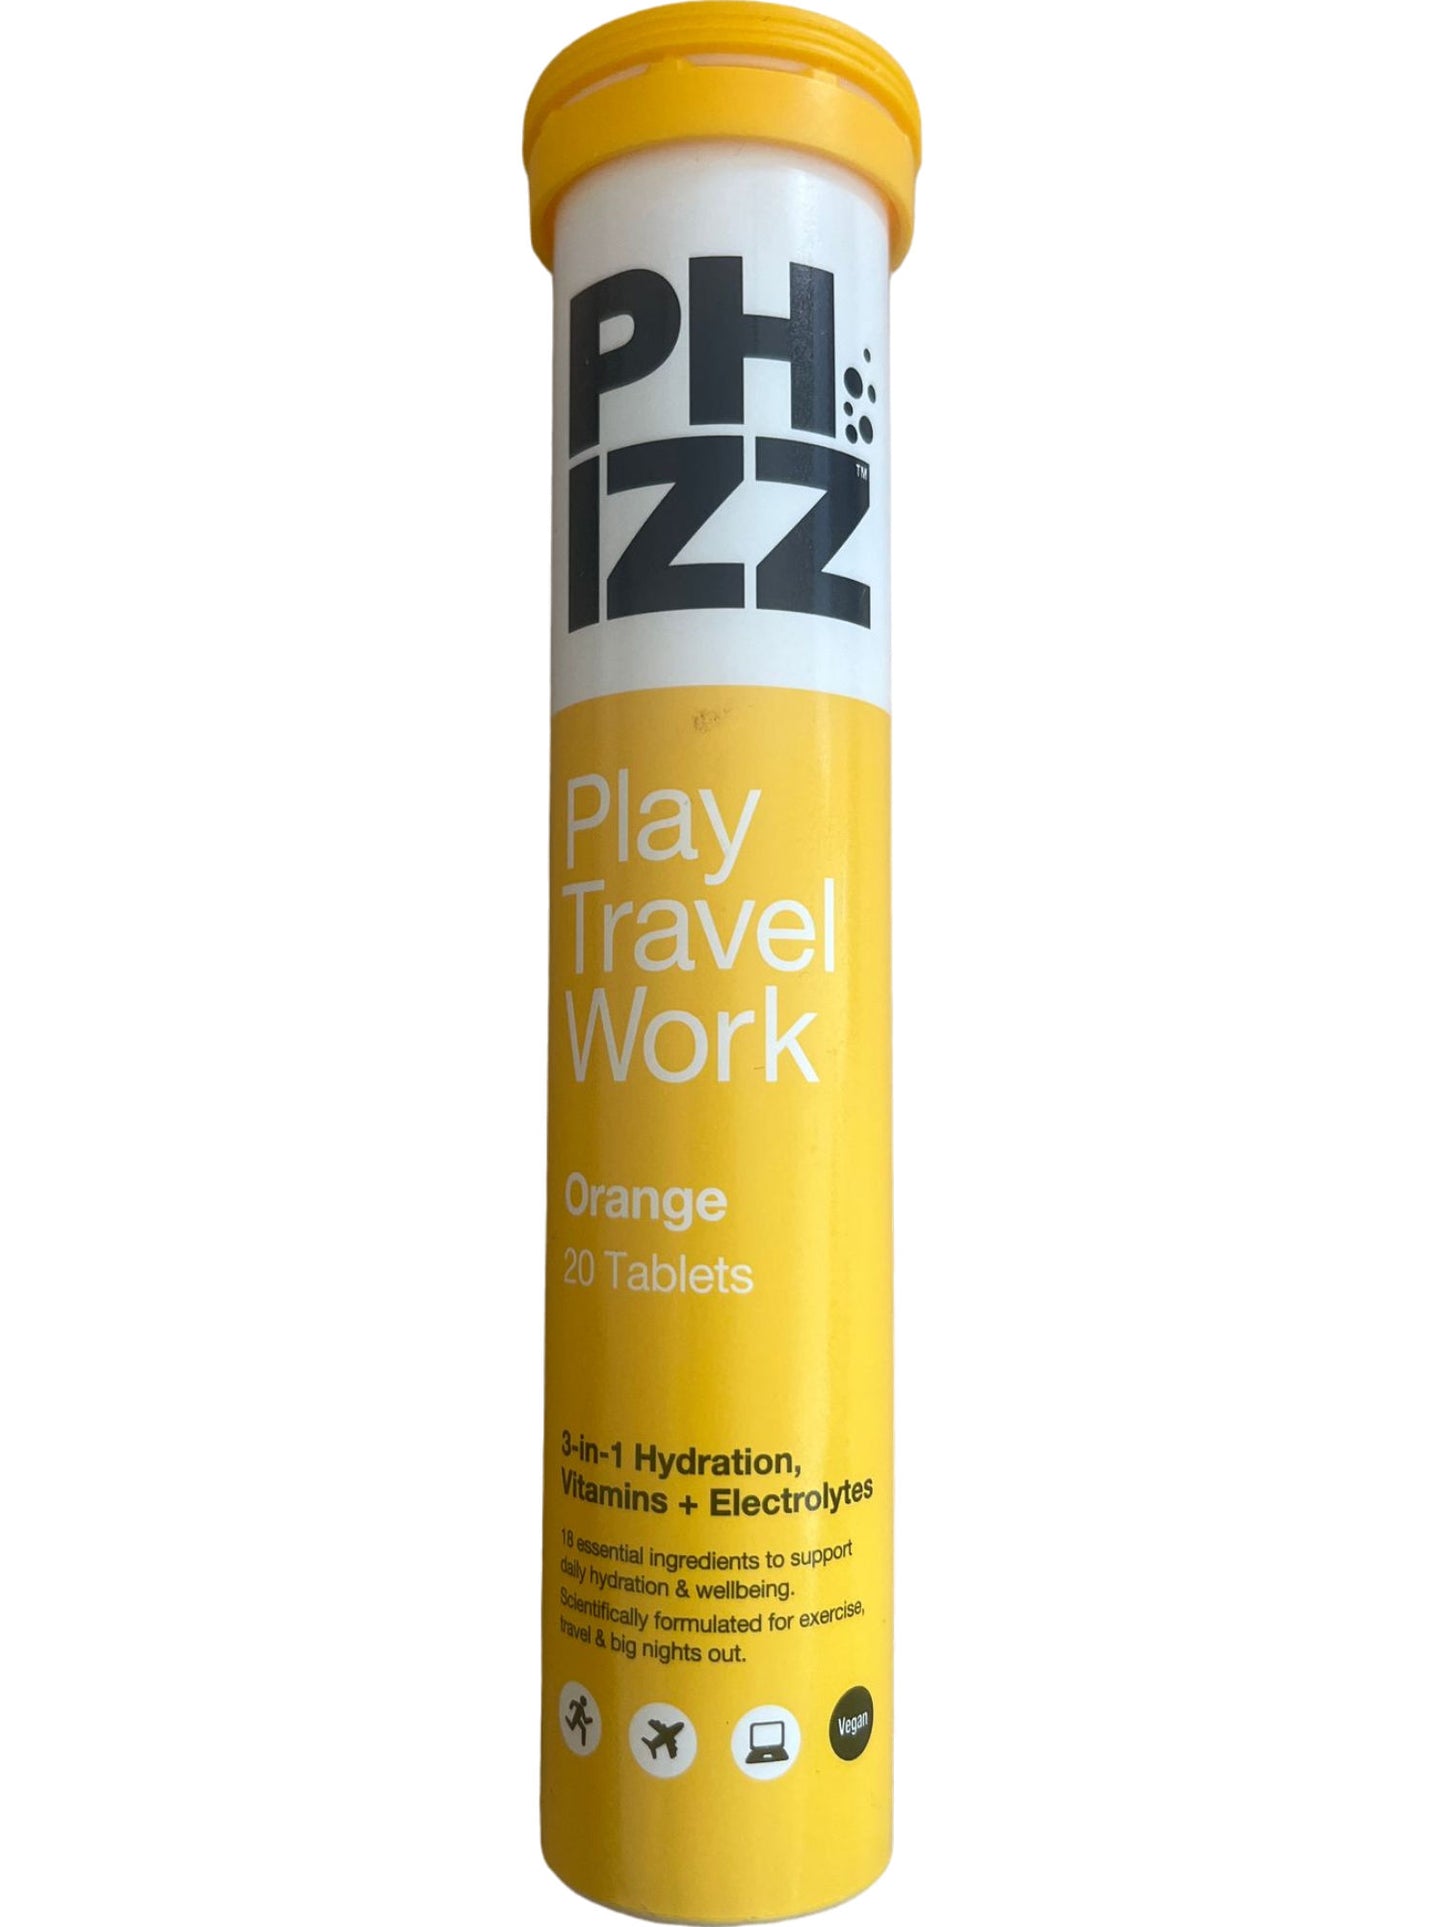 Phizz Orange Hydration Effervescent Electrolytes Vitamins Tablets UK 20 pack